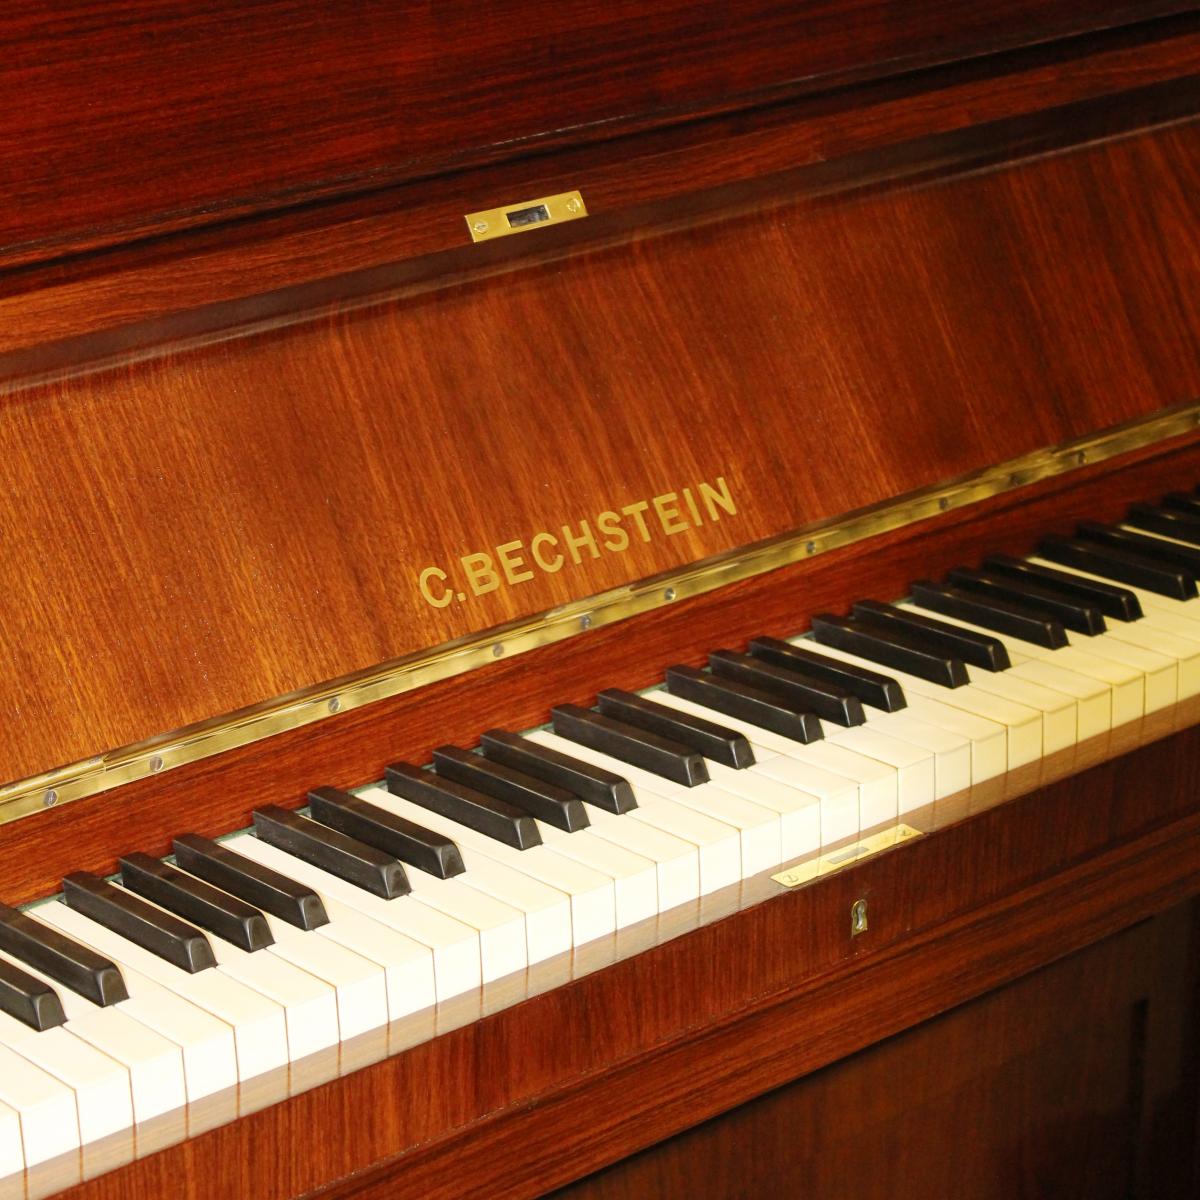 C. Bechstein model 10 Mahogany upright piano